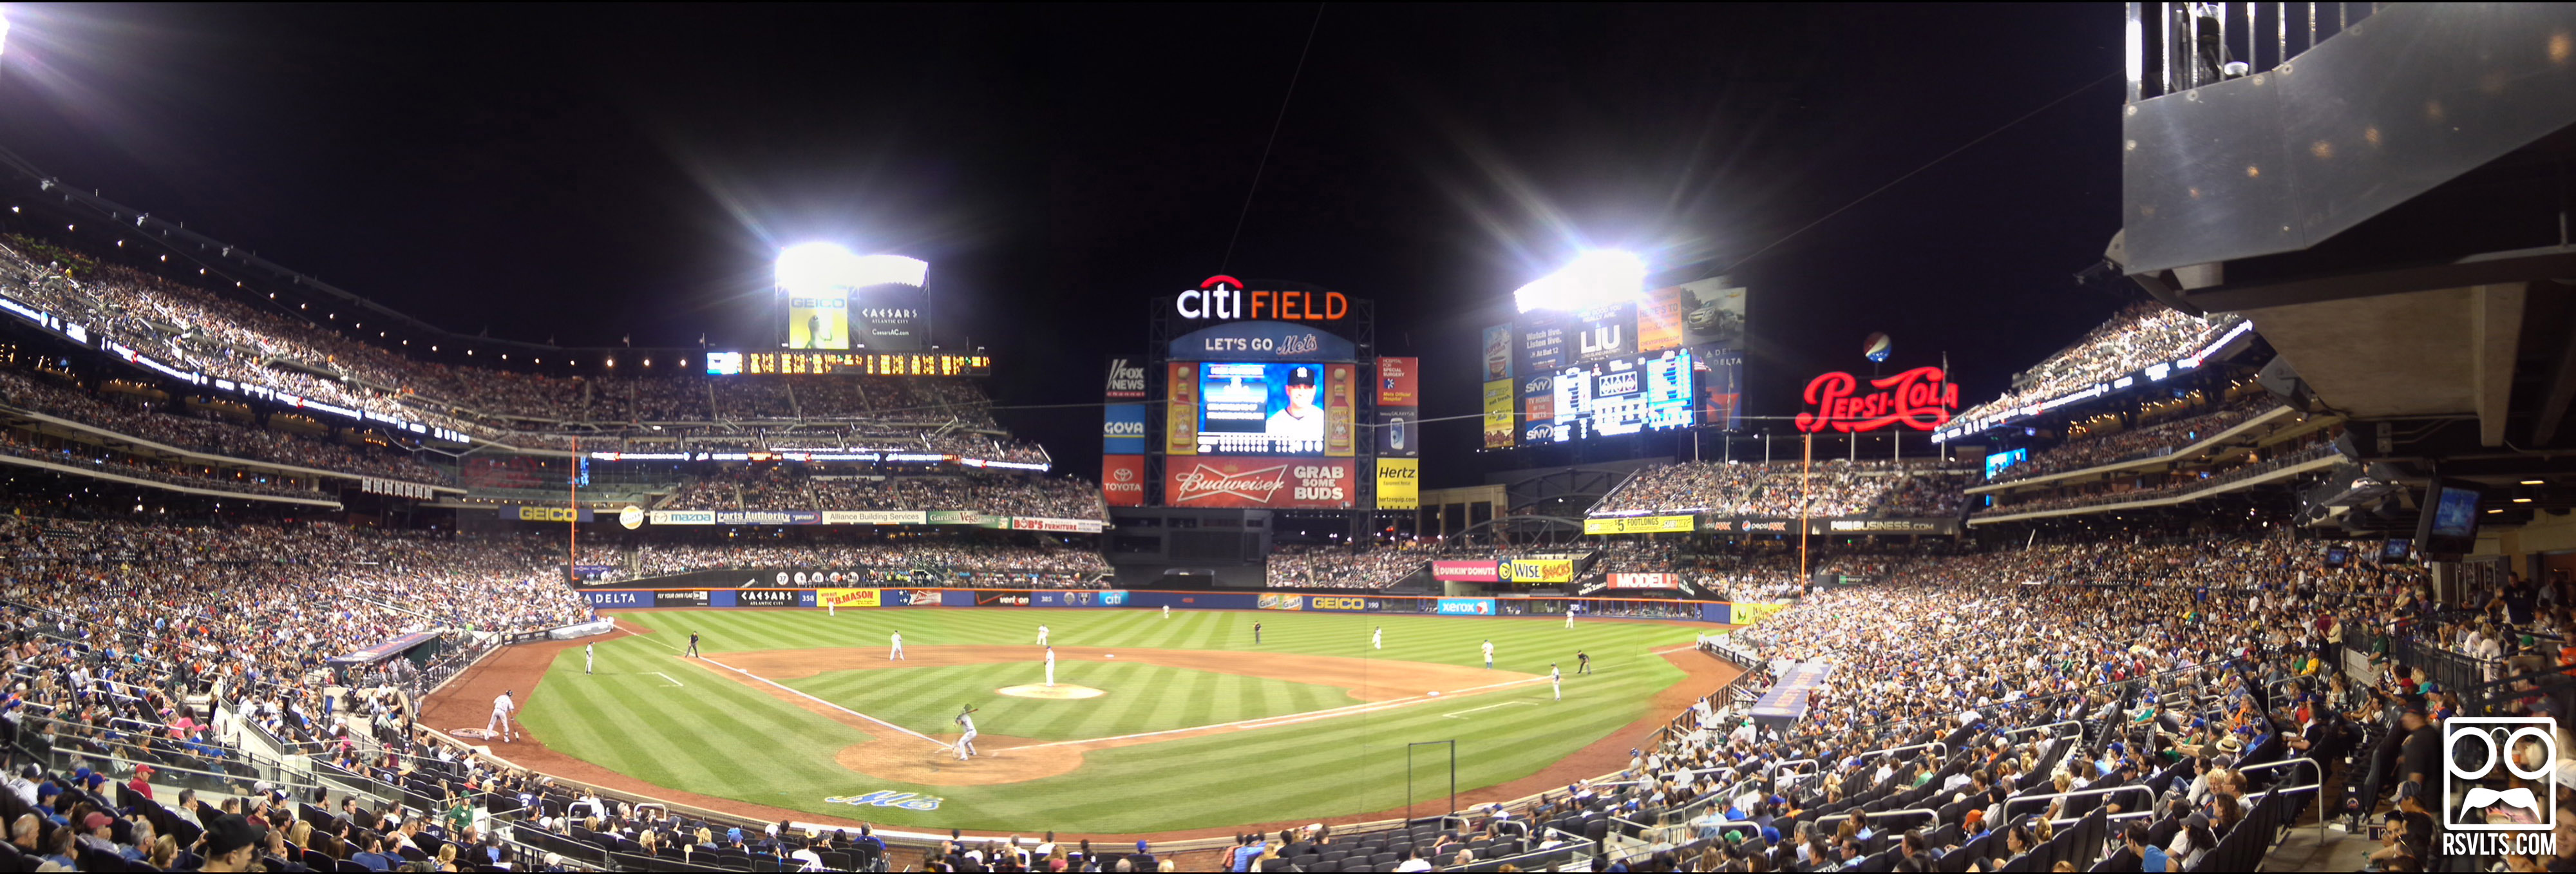 Mets Wallpaper Citi Field New York In